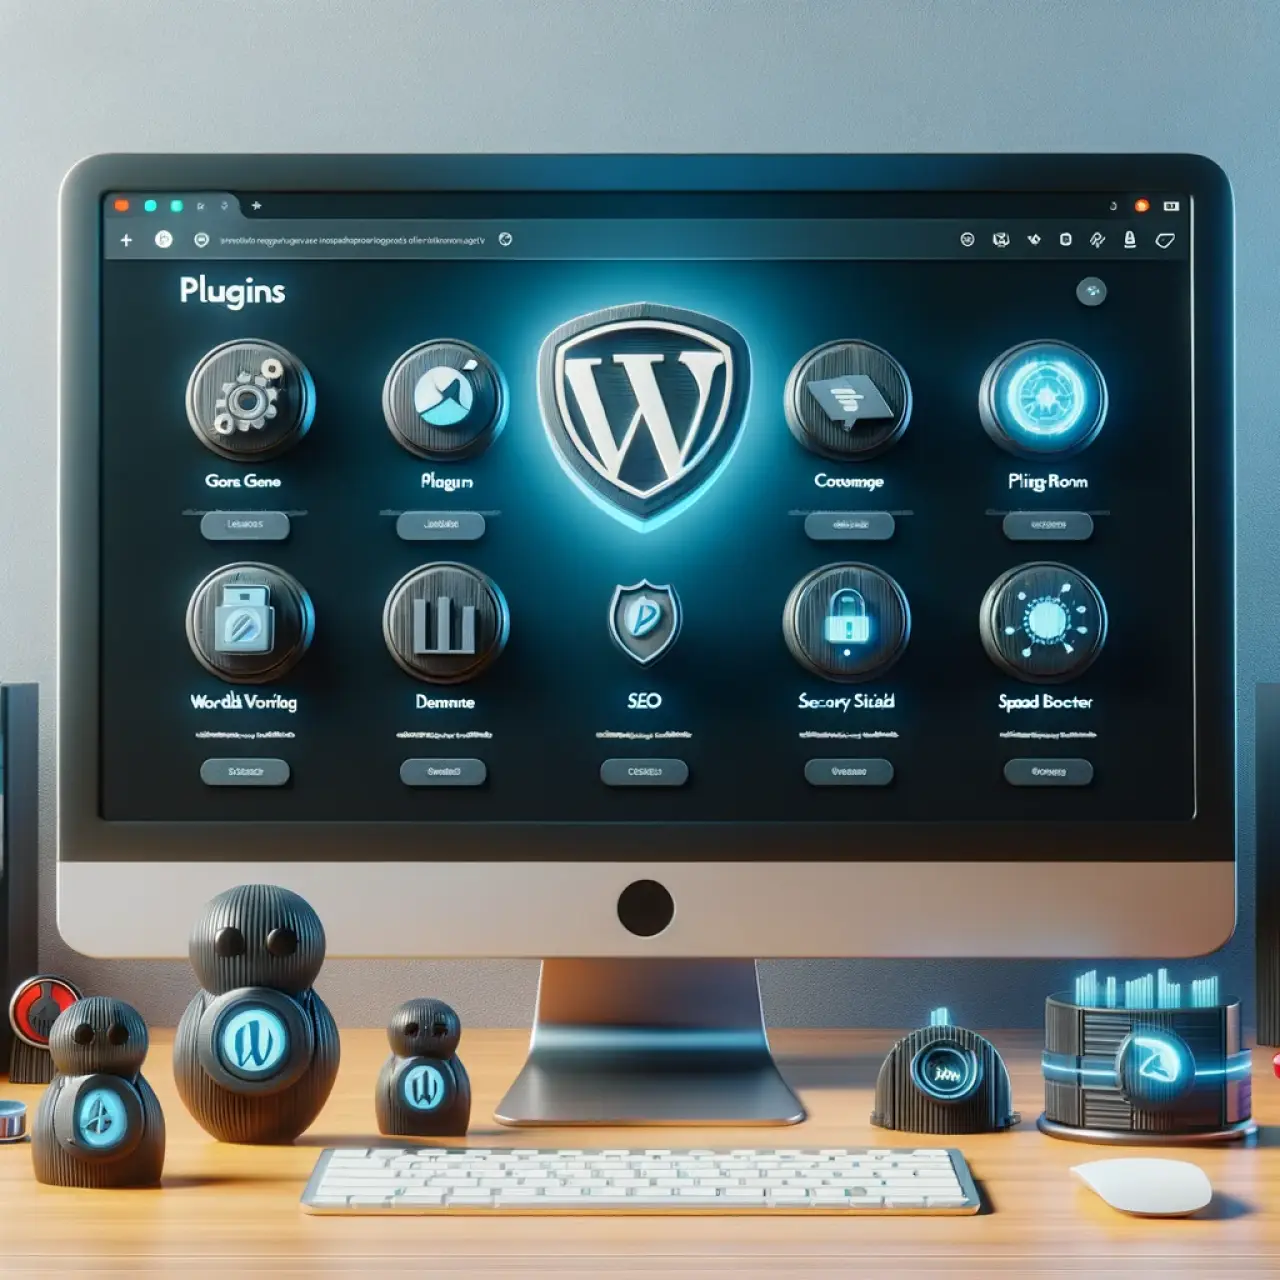 WordPress on the screen of a desktop computer